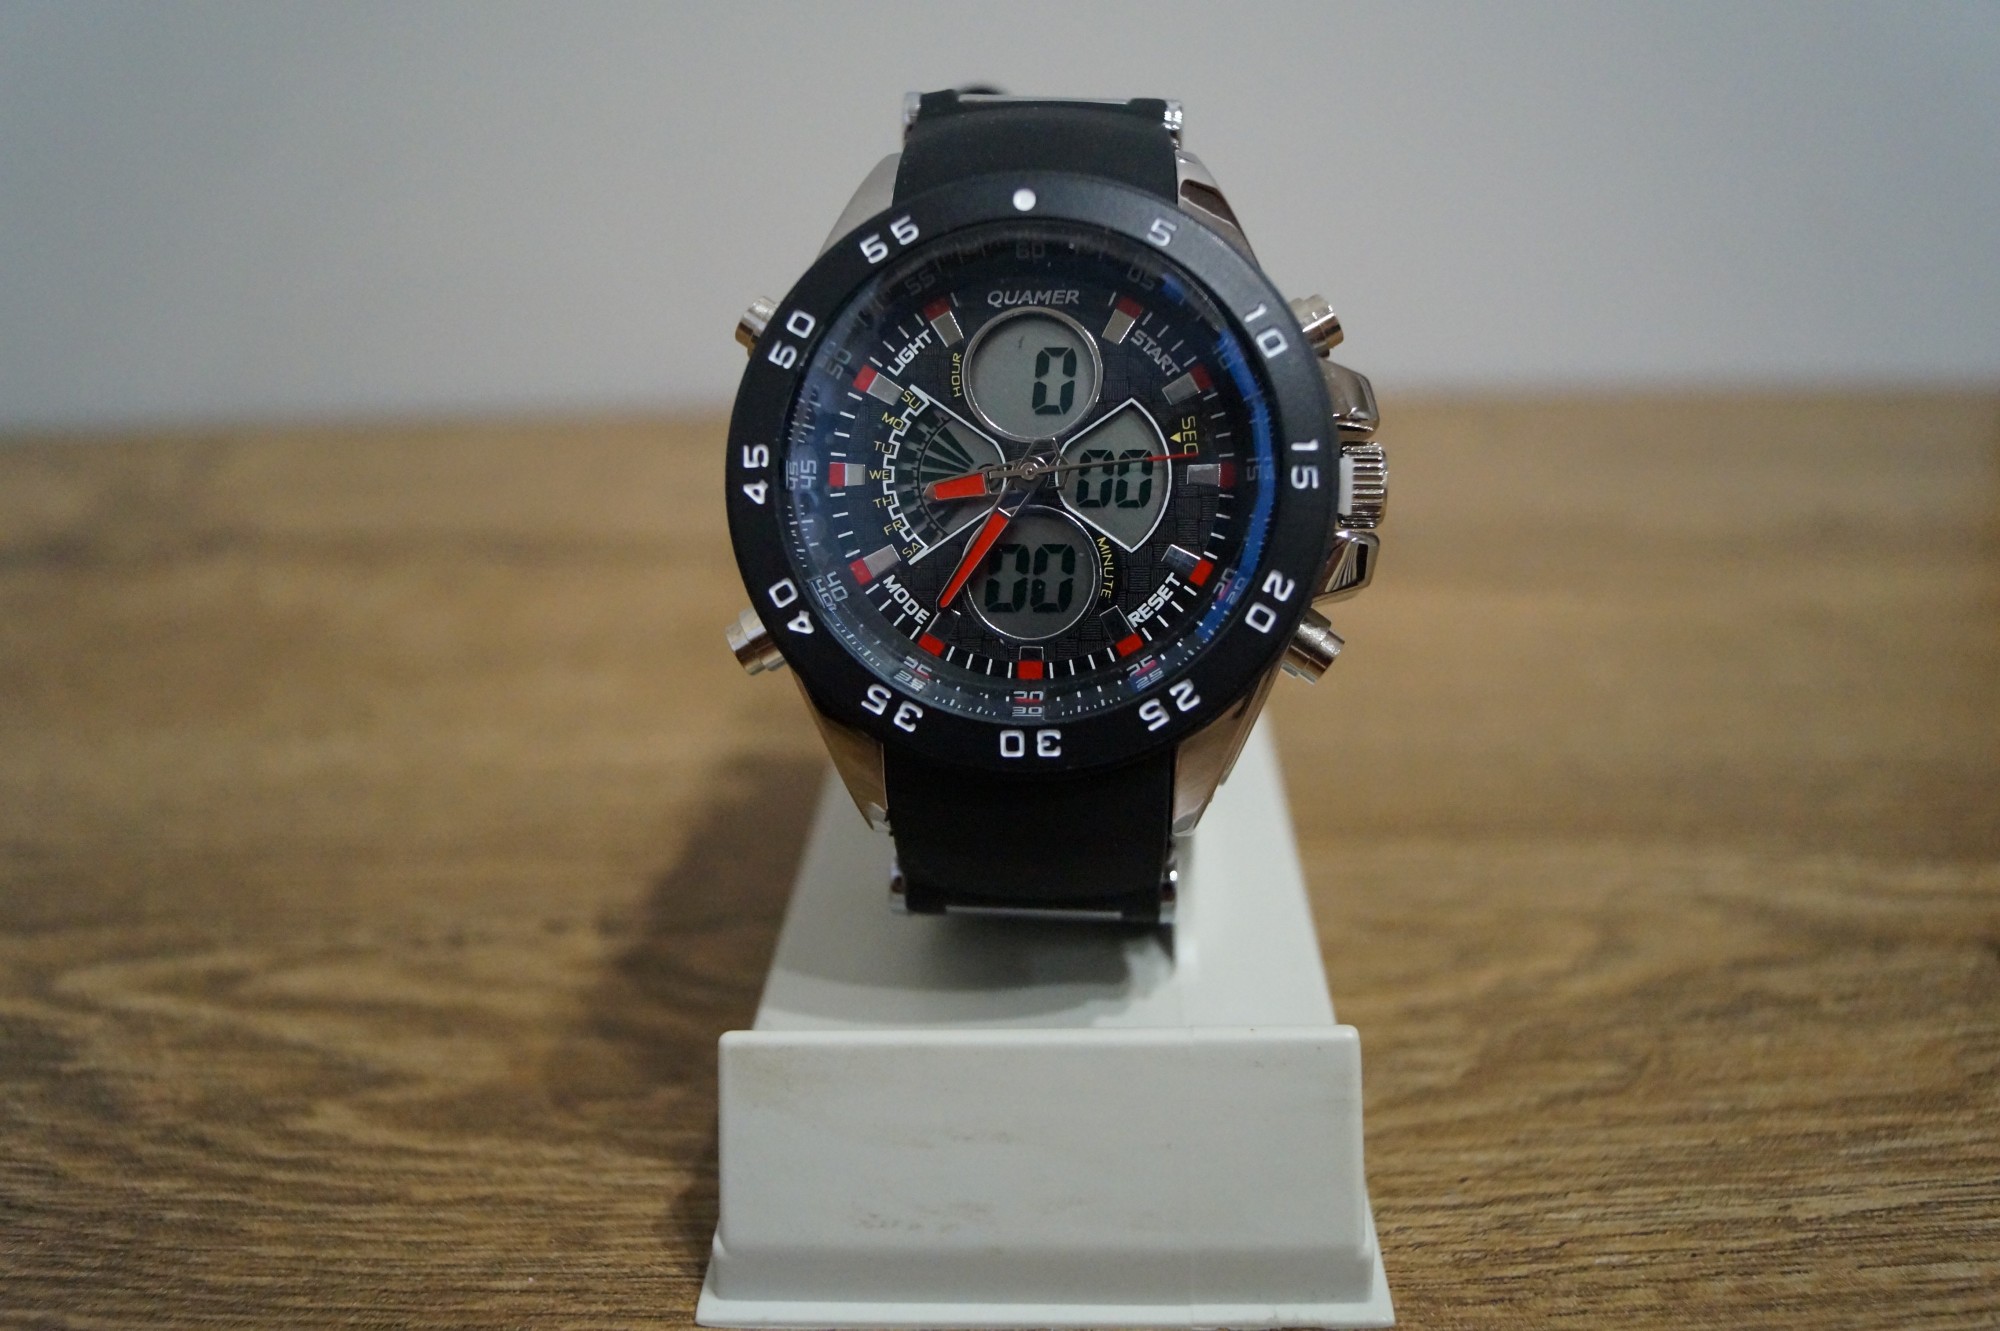 Quamer sports multi-functional wrist watch